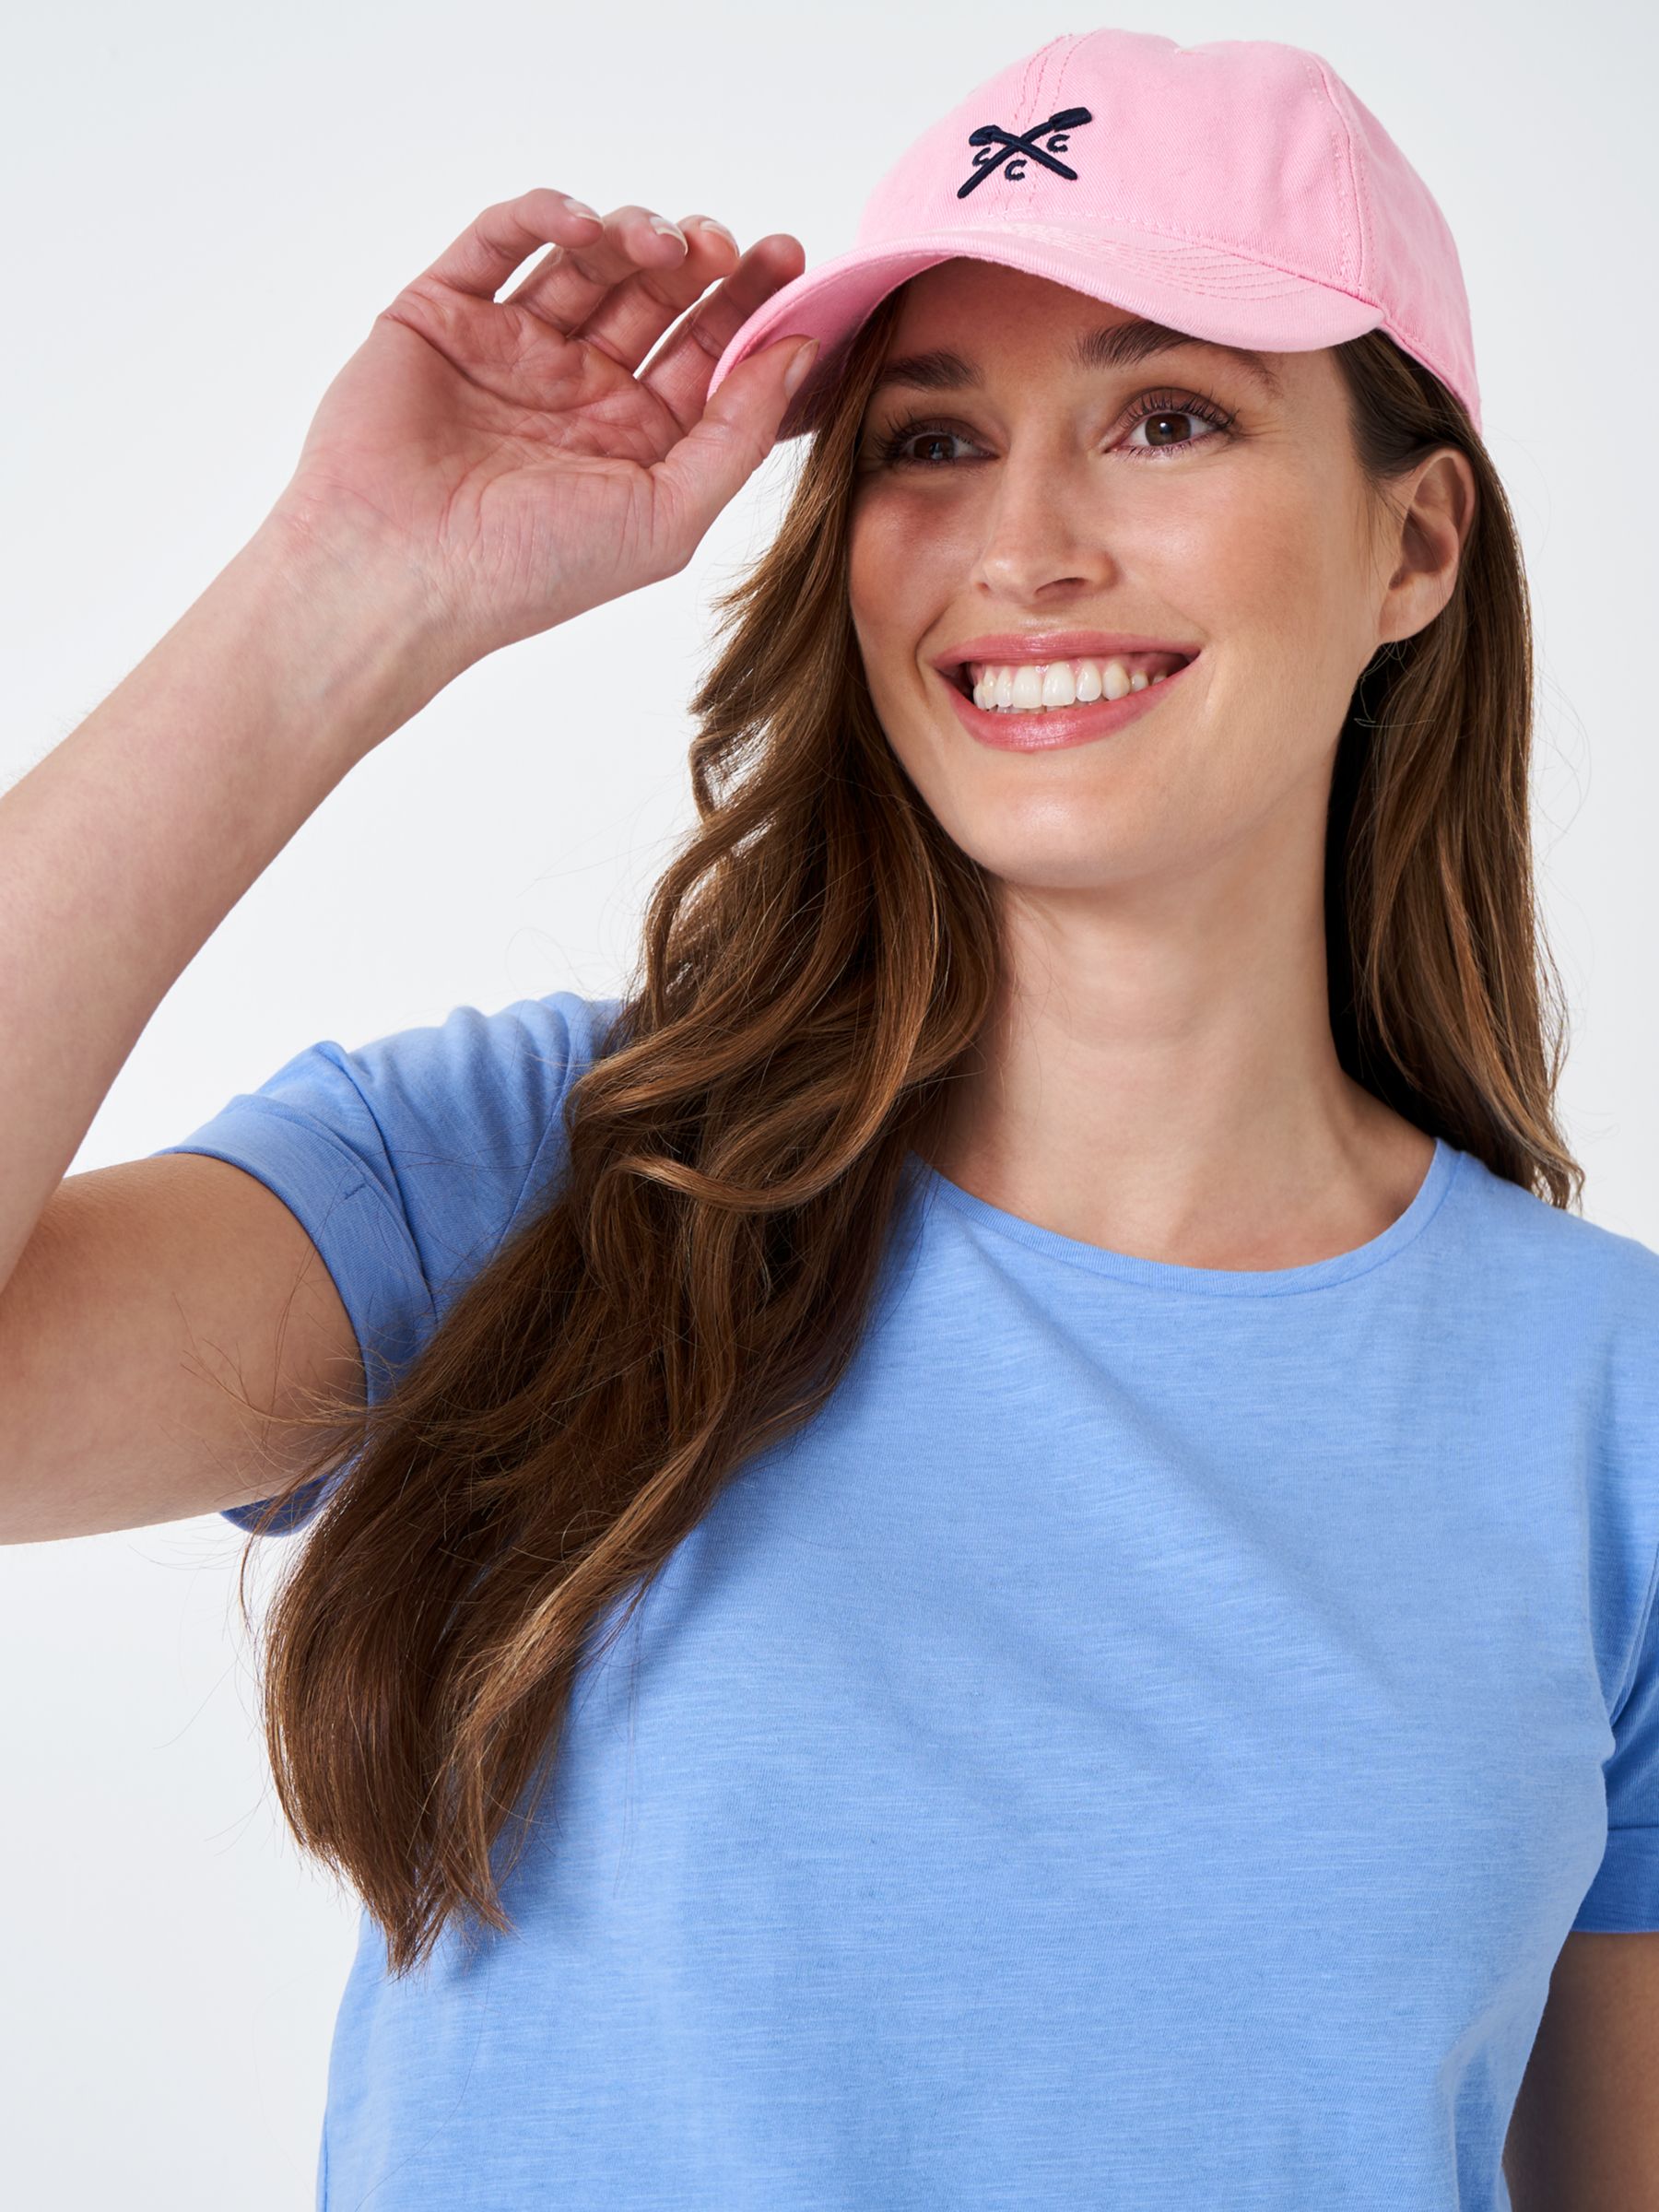 Crew Clothing Baseball Cap, Pastel Pink, One Size